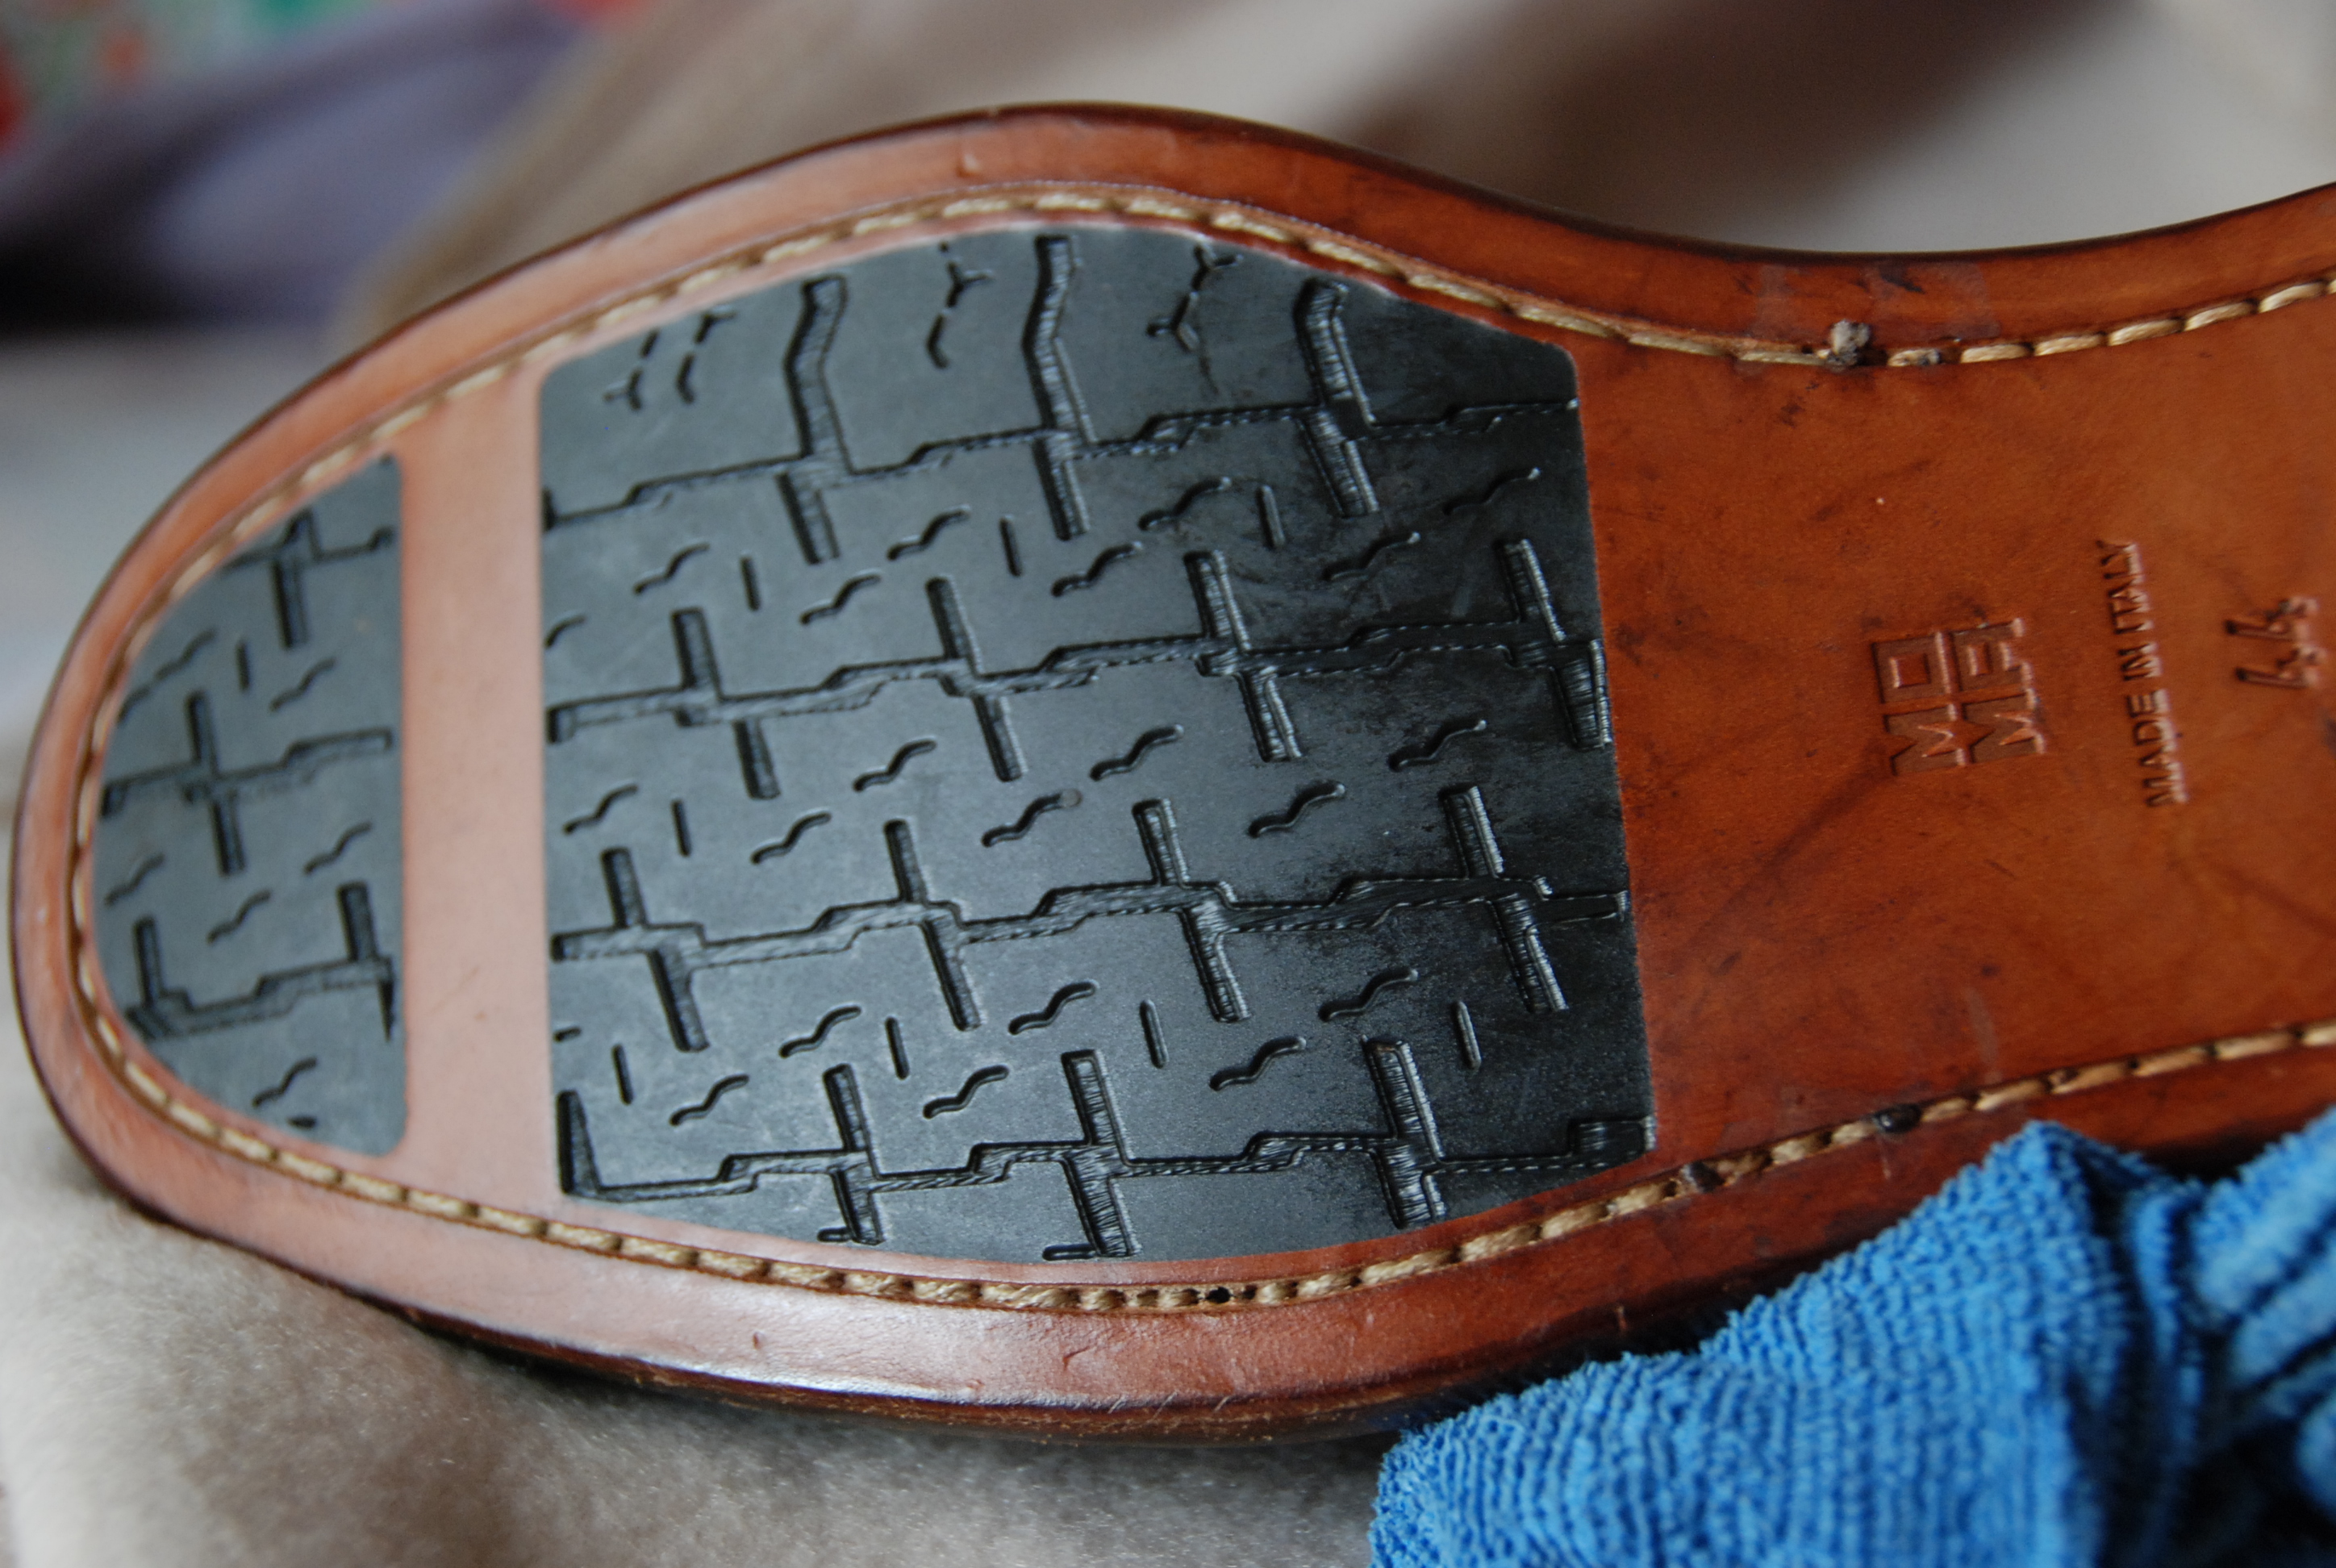 Leather sole stiching issue | Styleforum